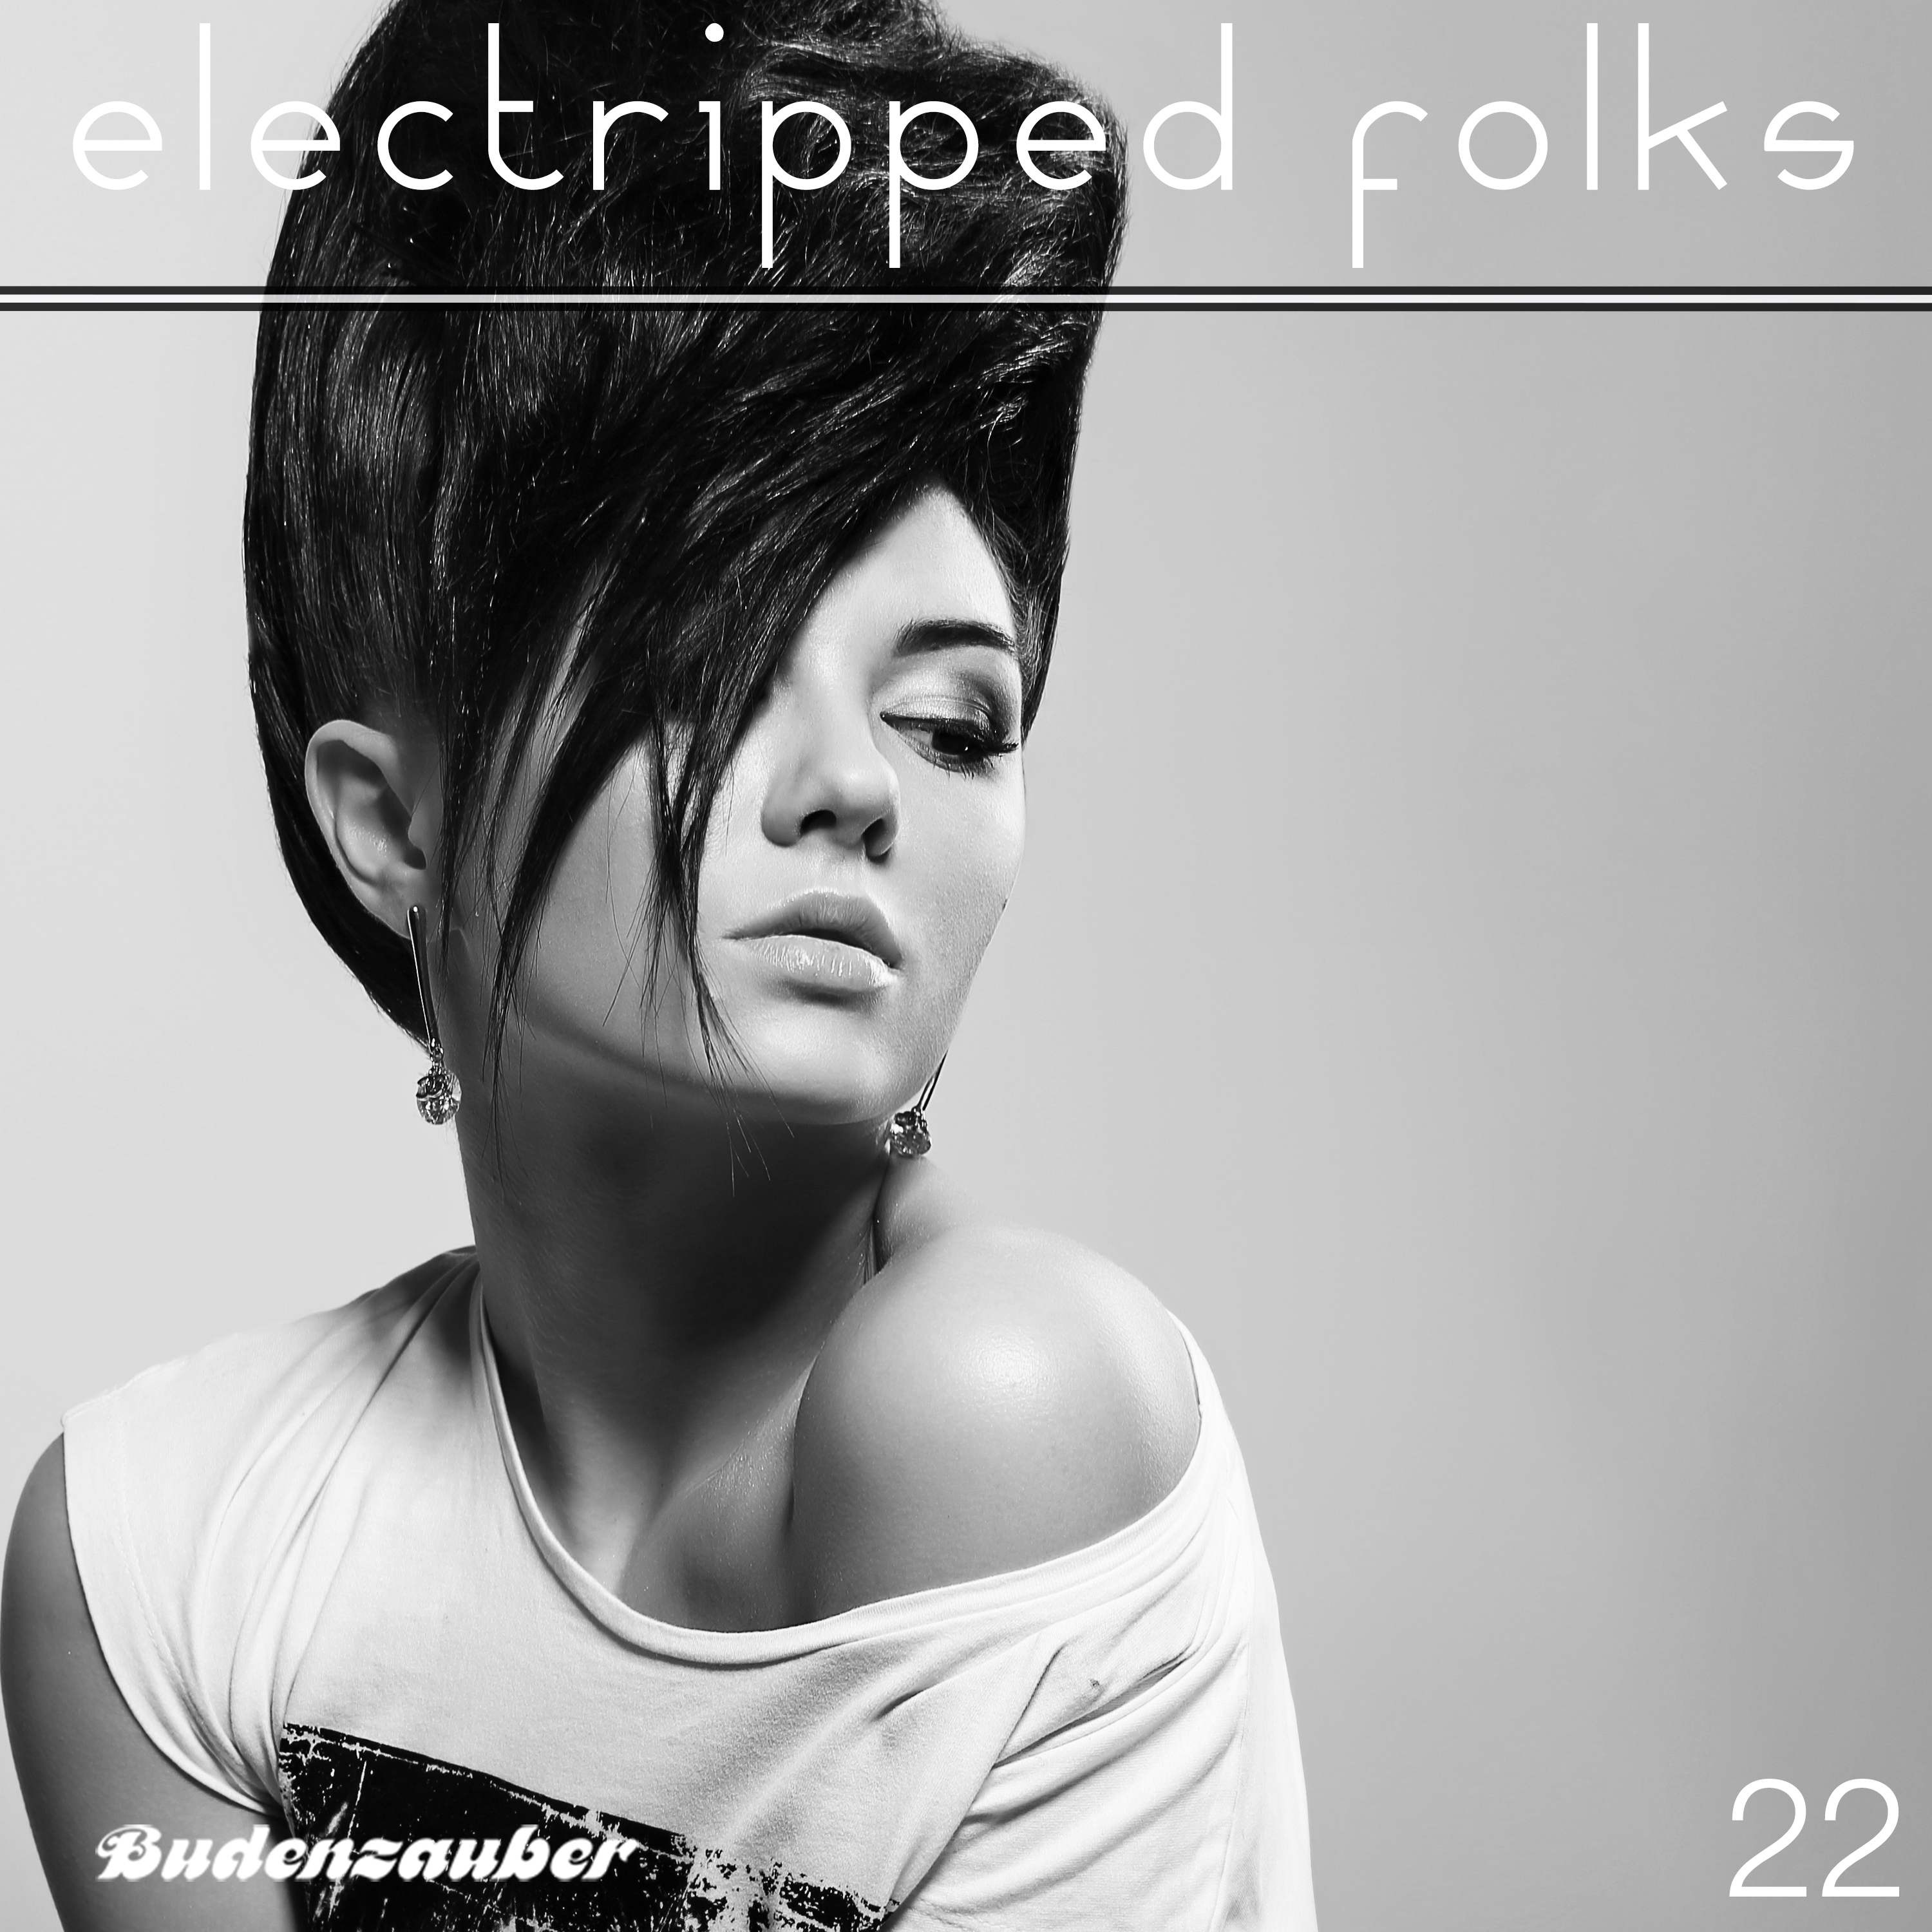 Electripped Folks, 22